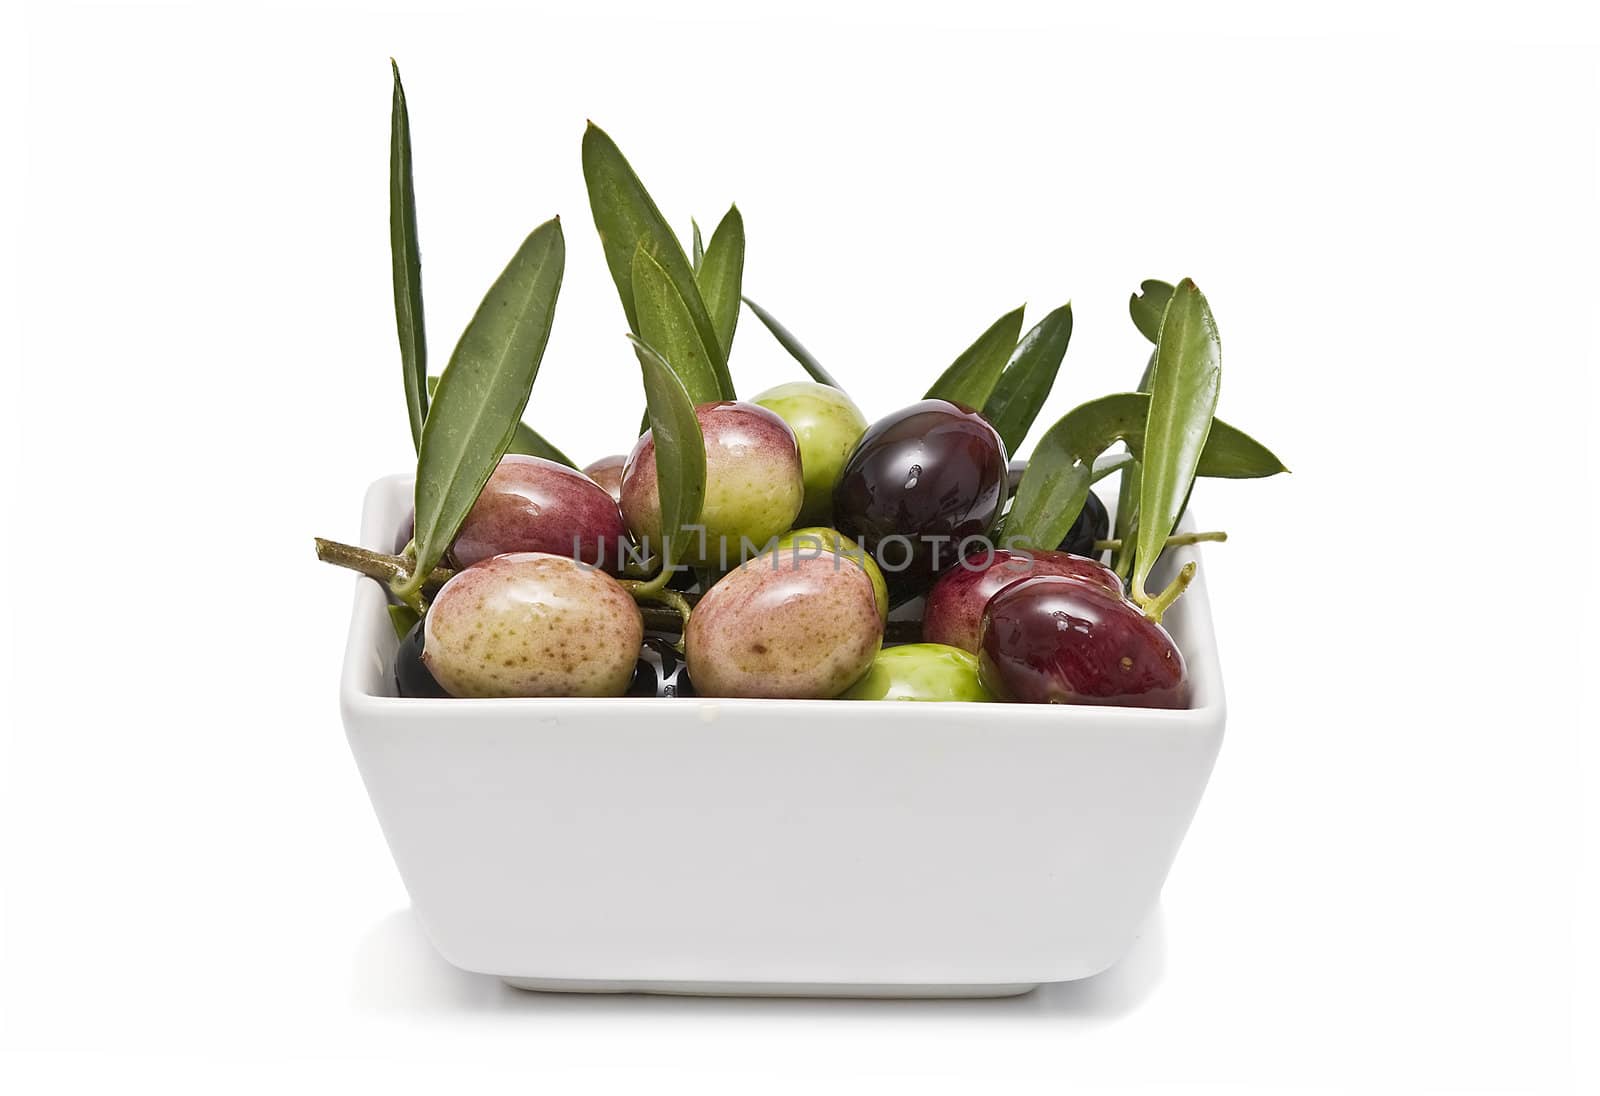 Bowl full of olives. by angelsimon